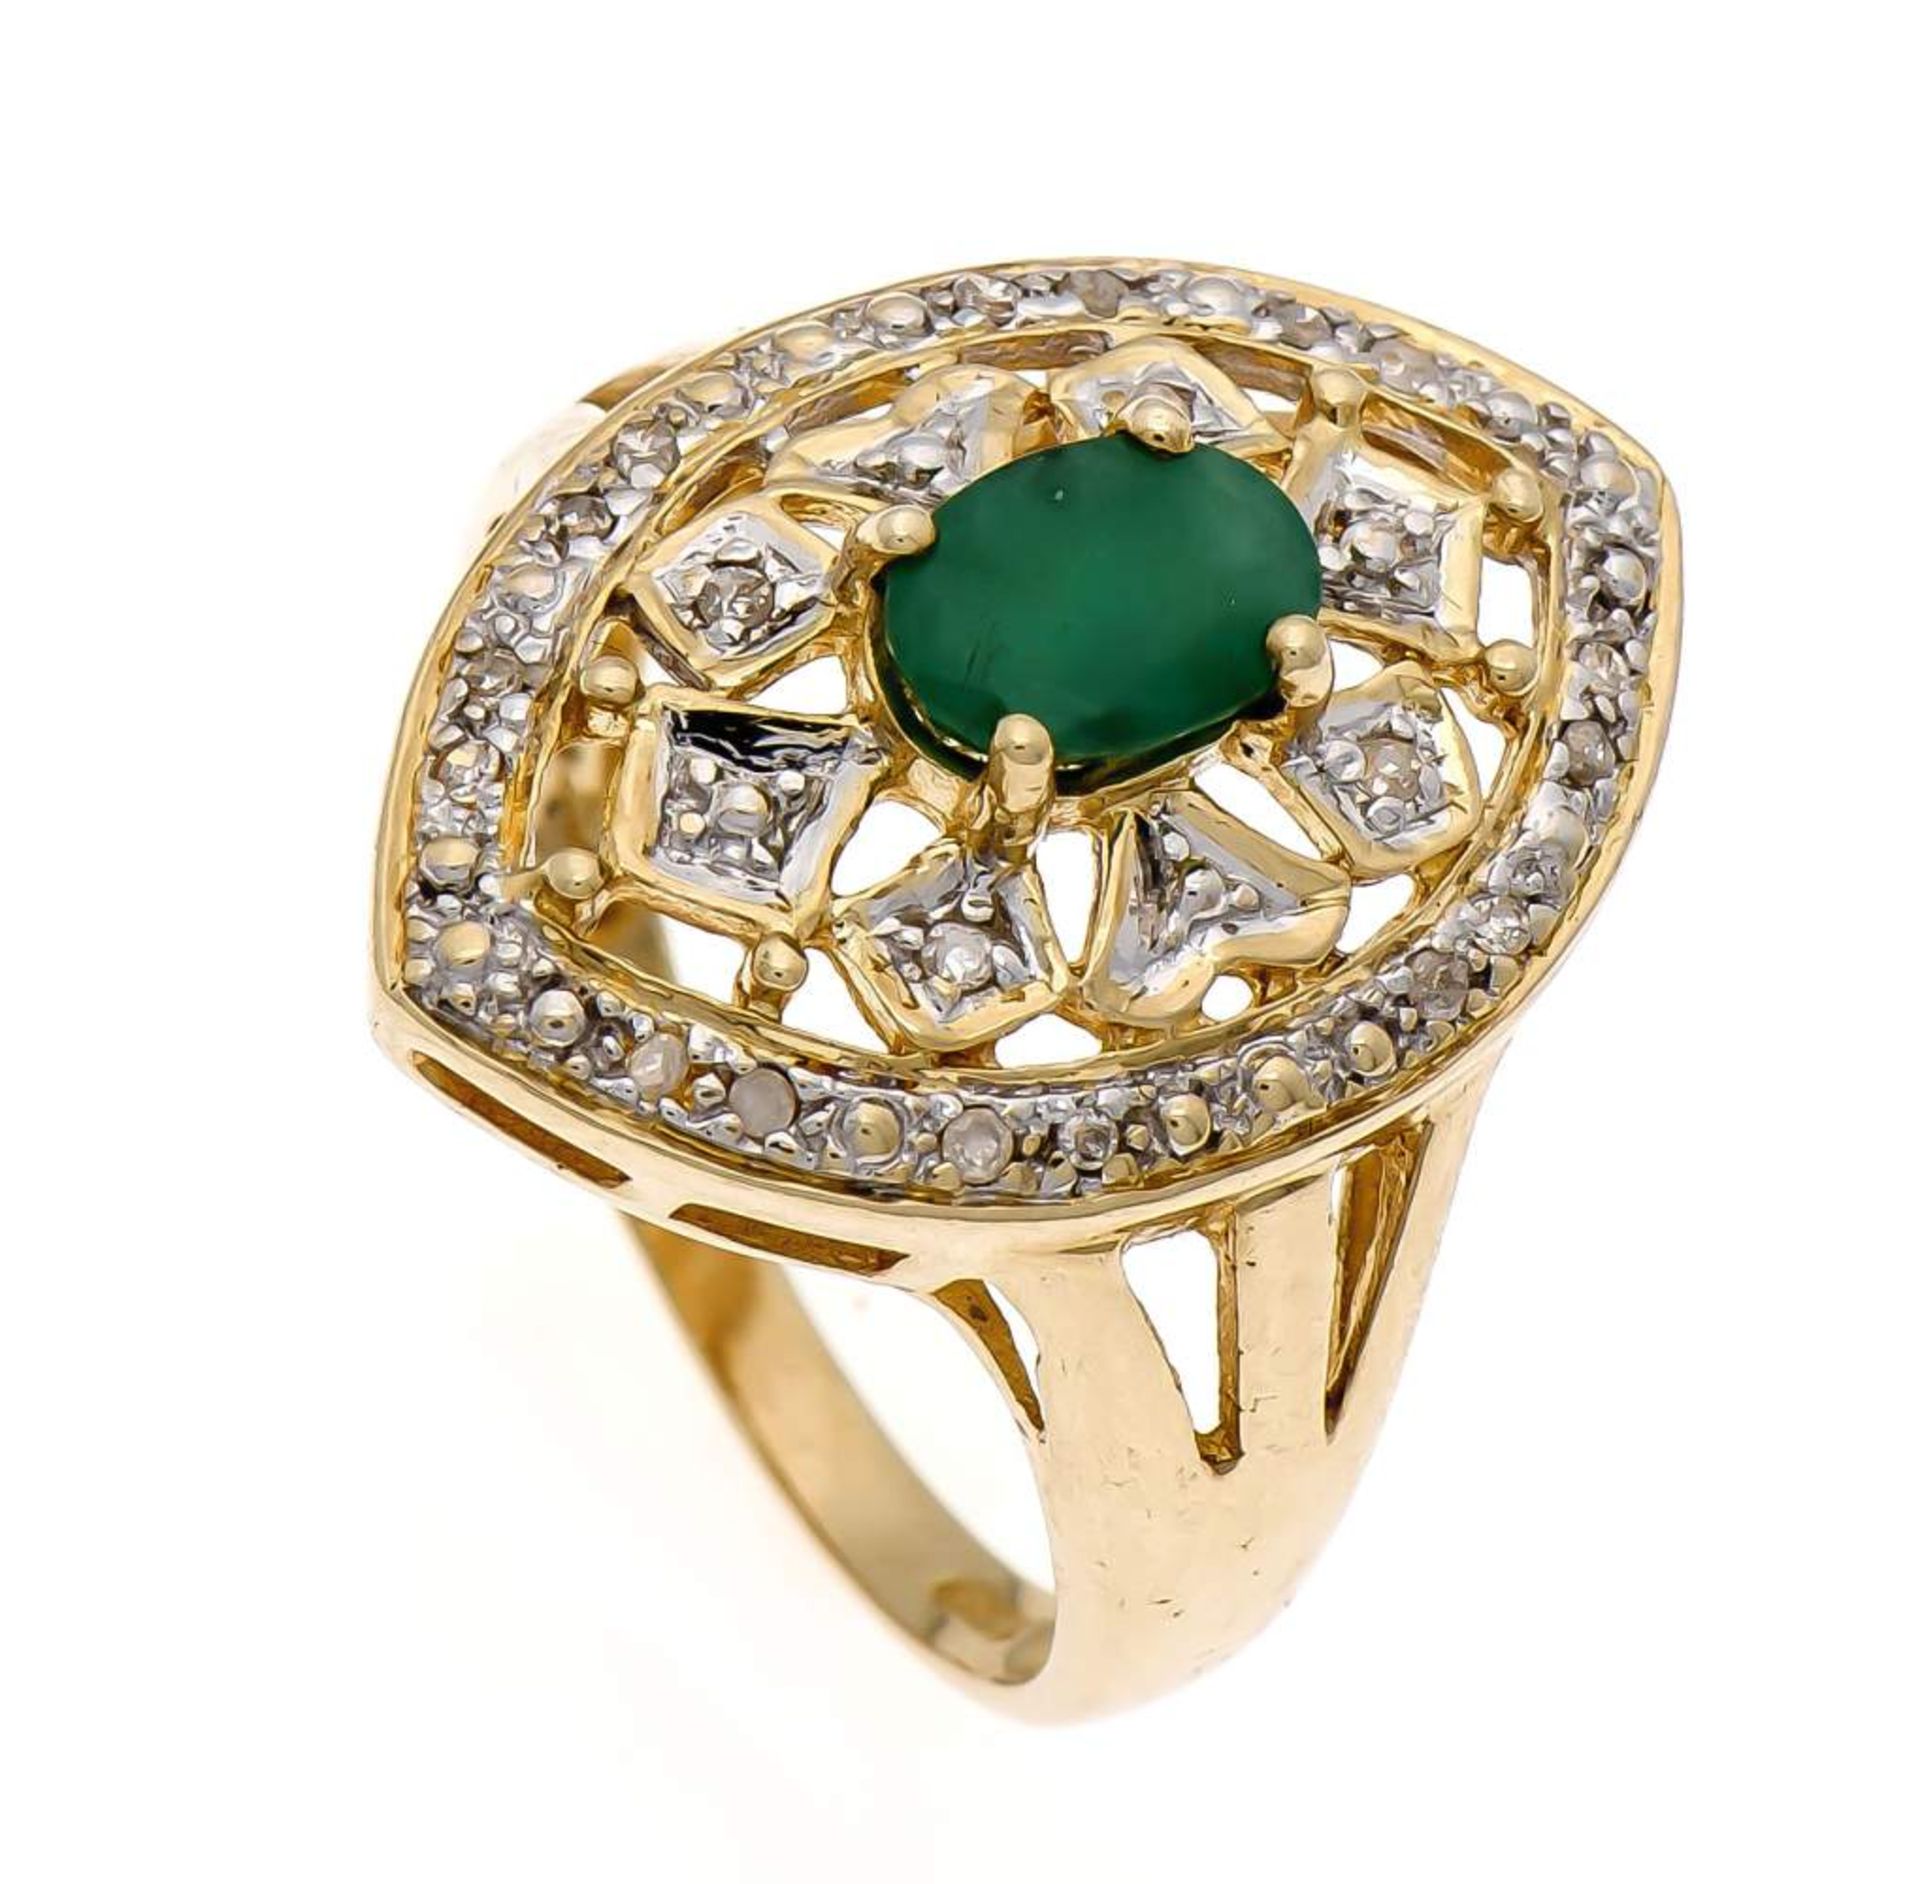 Smaragd-Diamant-Ring GG/WG 10 KT (417/000) mit einem oval fac. Smaragd 7 x 5 mm undDiamanten, RG 54,